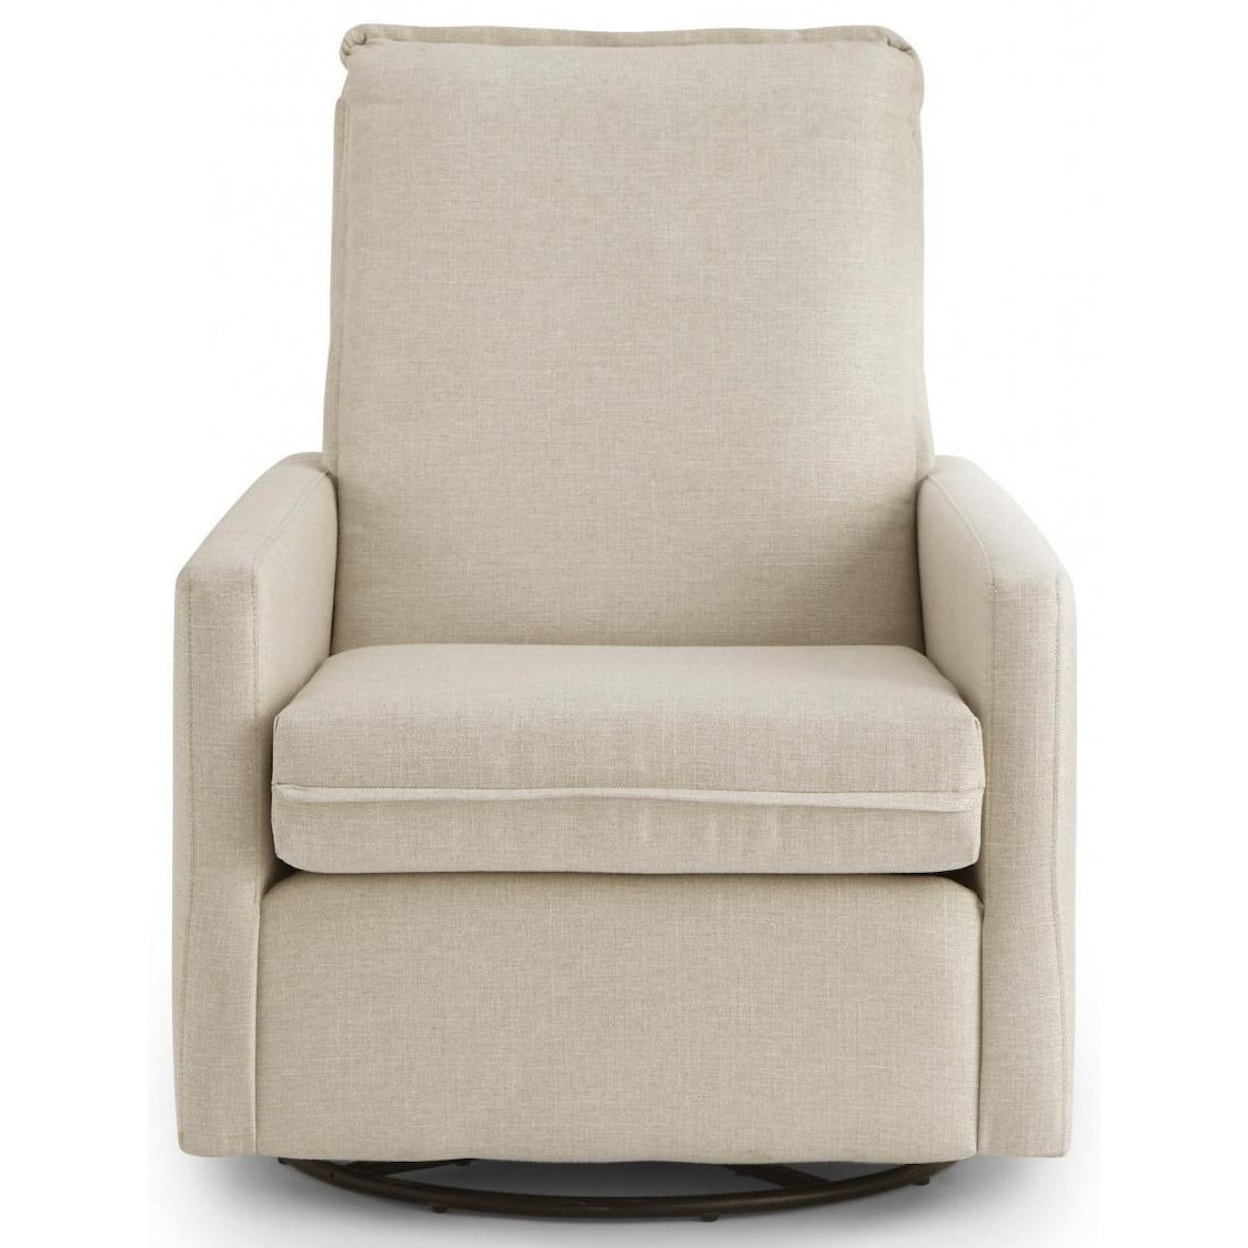 Best Home Furnishings Bre Swivel Glider Chair